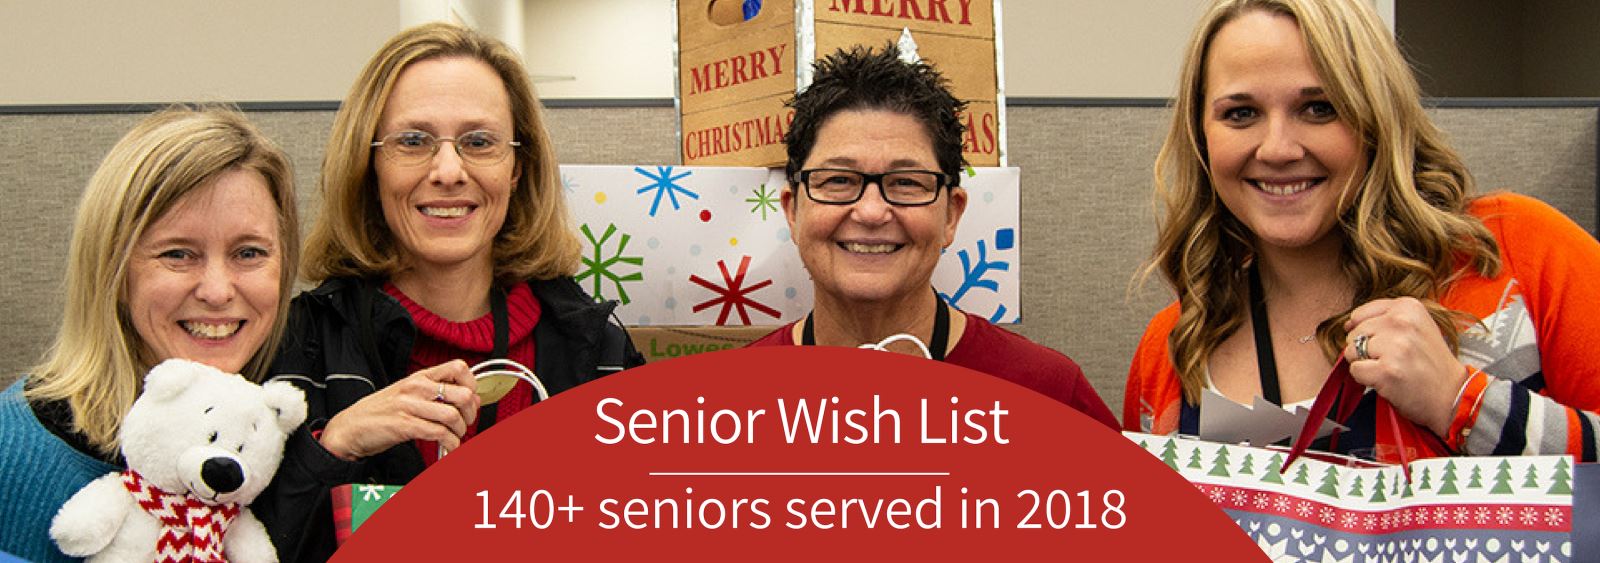 Senior Wish Tree 2018 - 240 + Seniors Served!